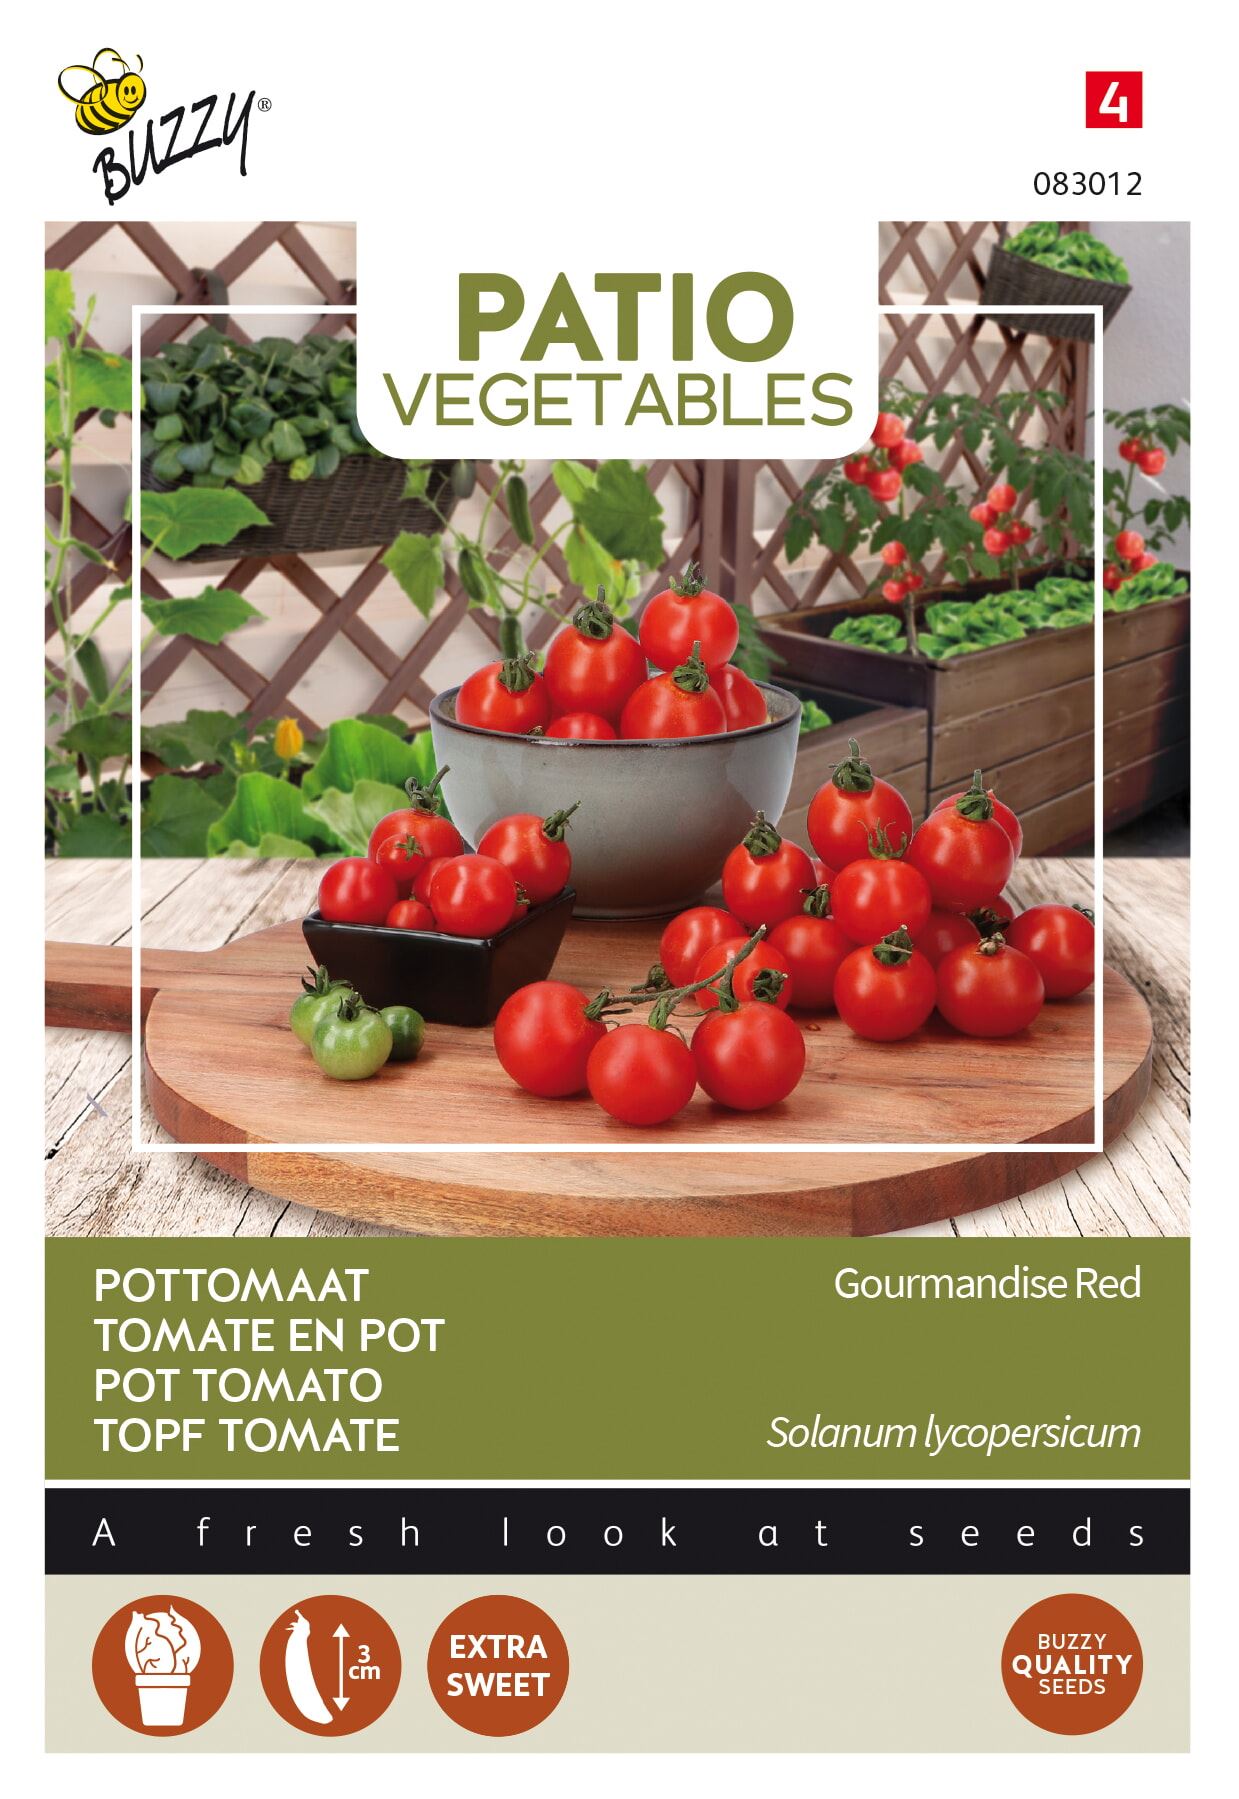 Buzzy® Patio Veggies, Tomate en pot Gourmandise Red